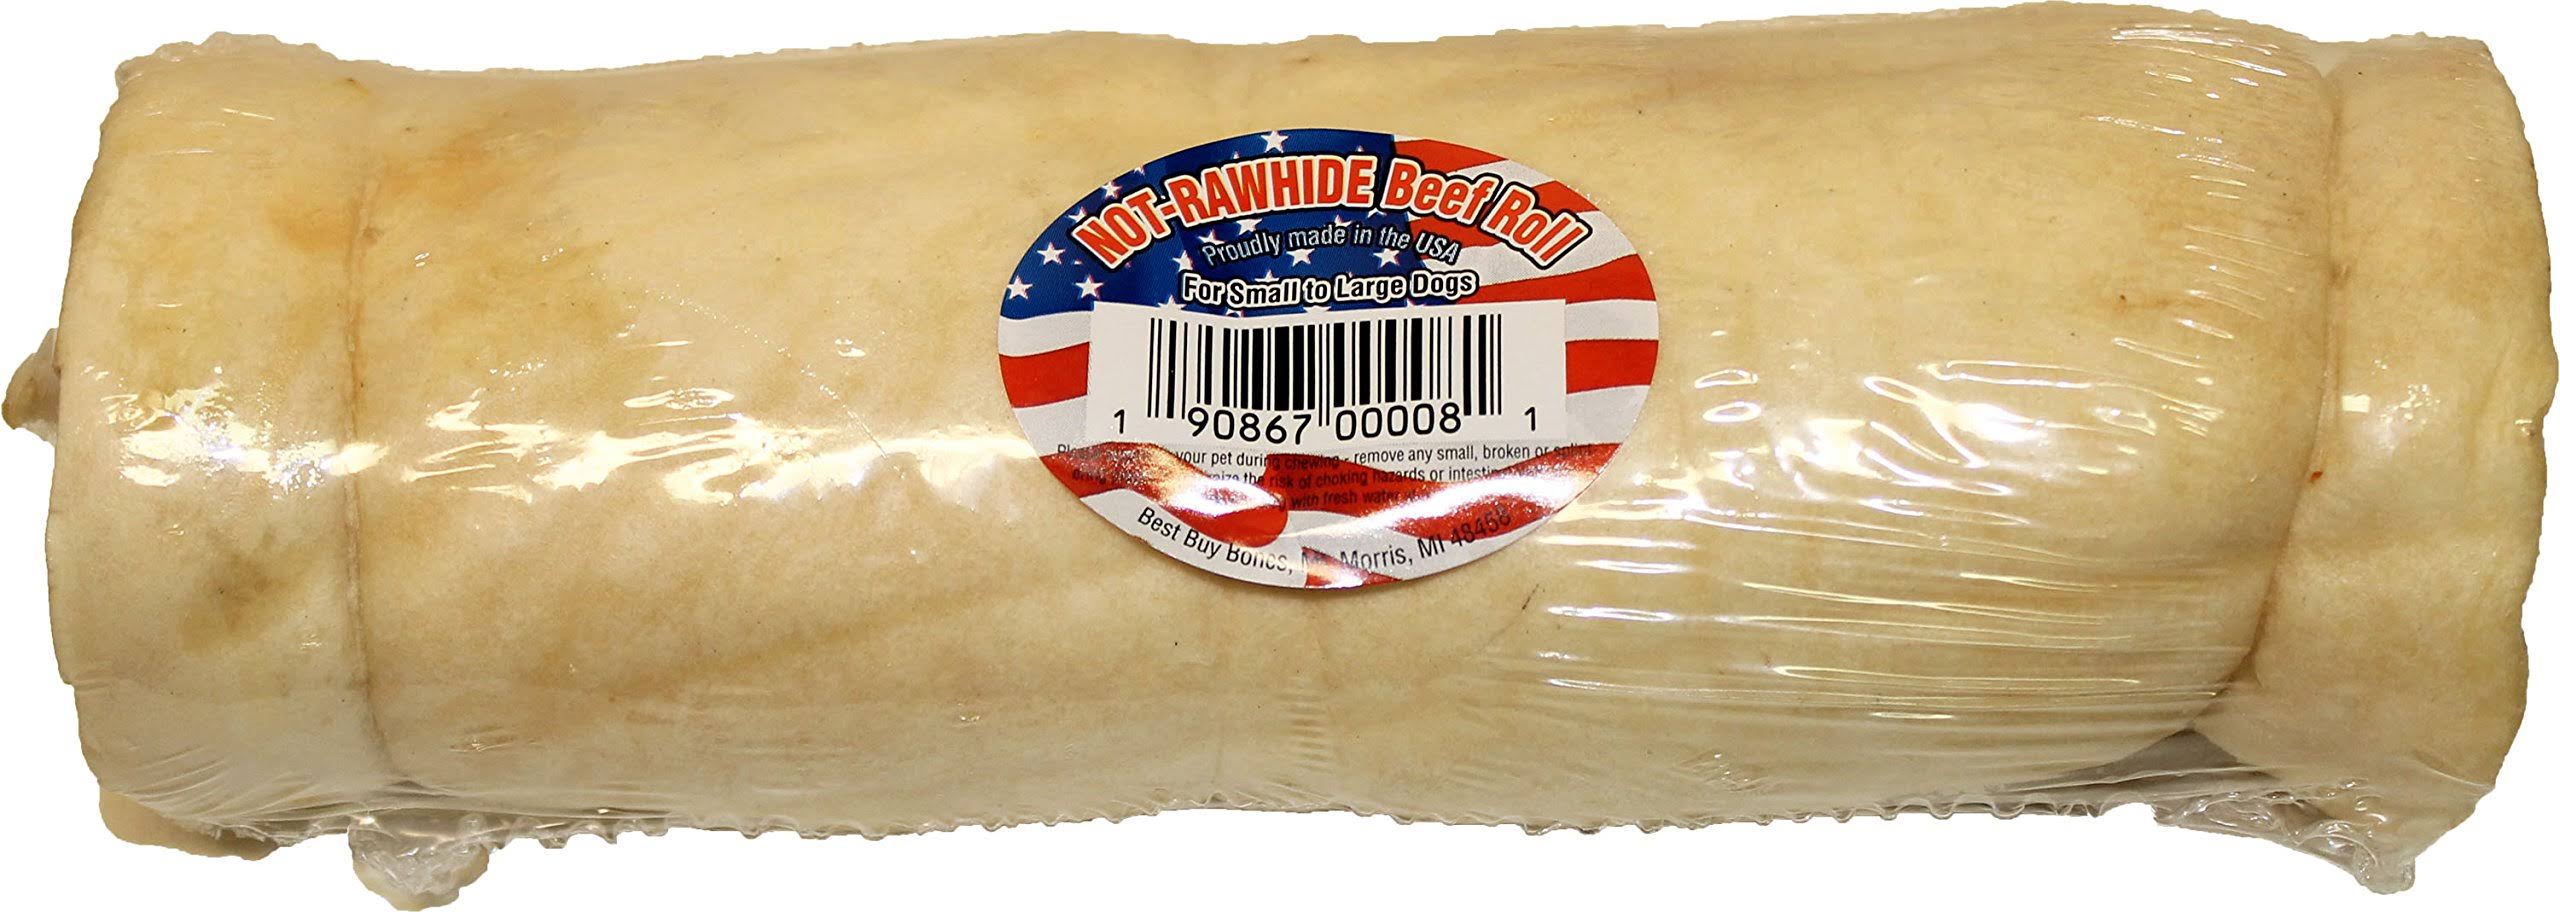 16 Best Buy Bones USA not-rawhide Beef Roll Natural Chew Treat ($6.34 @ 16 min)